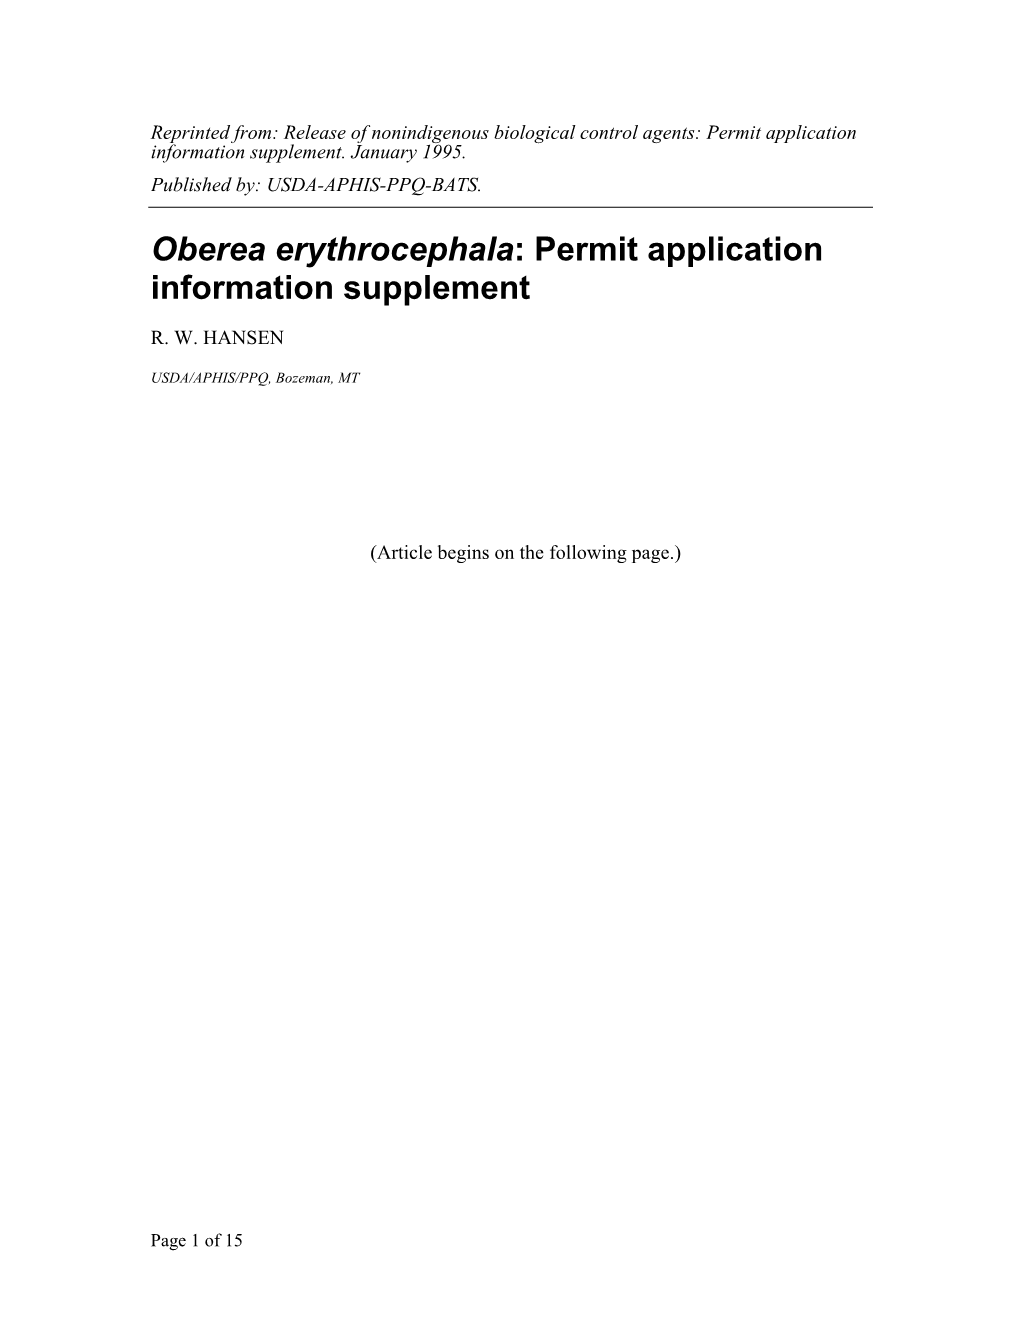 Oberea Erythrocephala: Permit Application Information Supplement